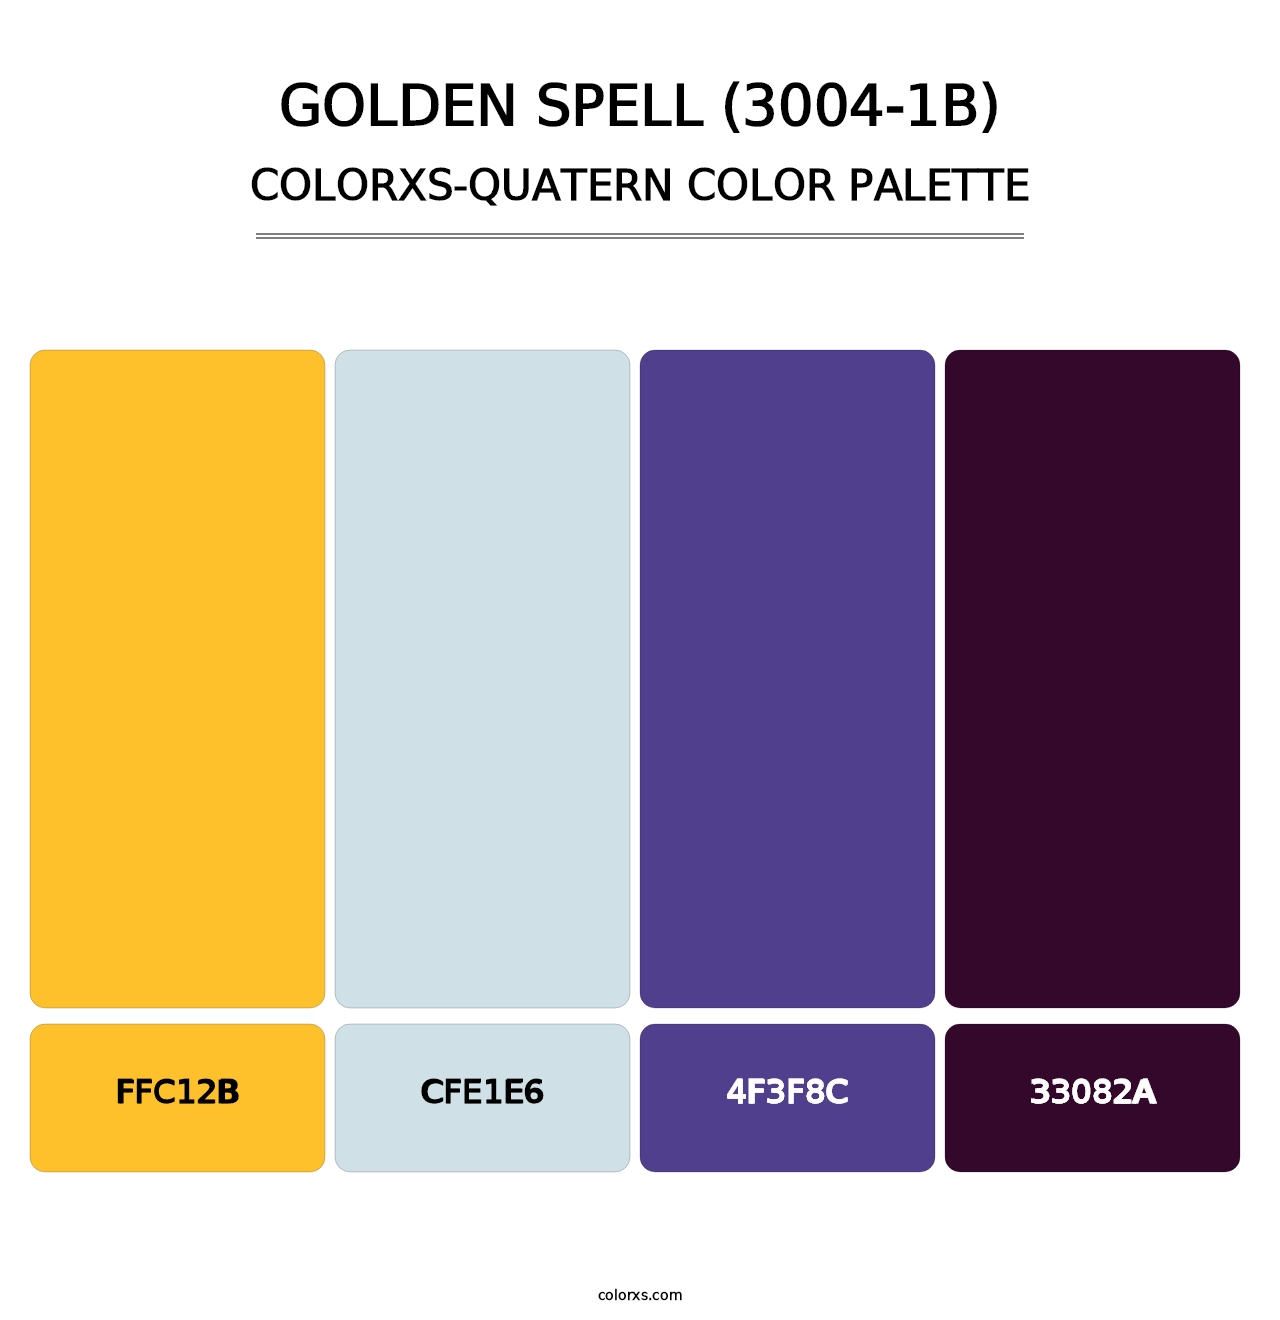 Golden Spell (3004-1B) - Colorxs Quatern Palette